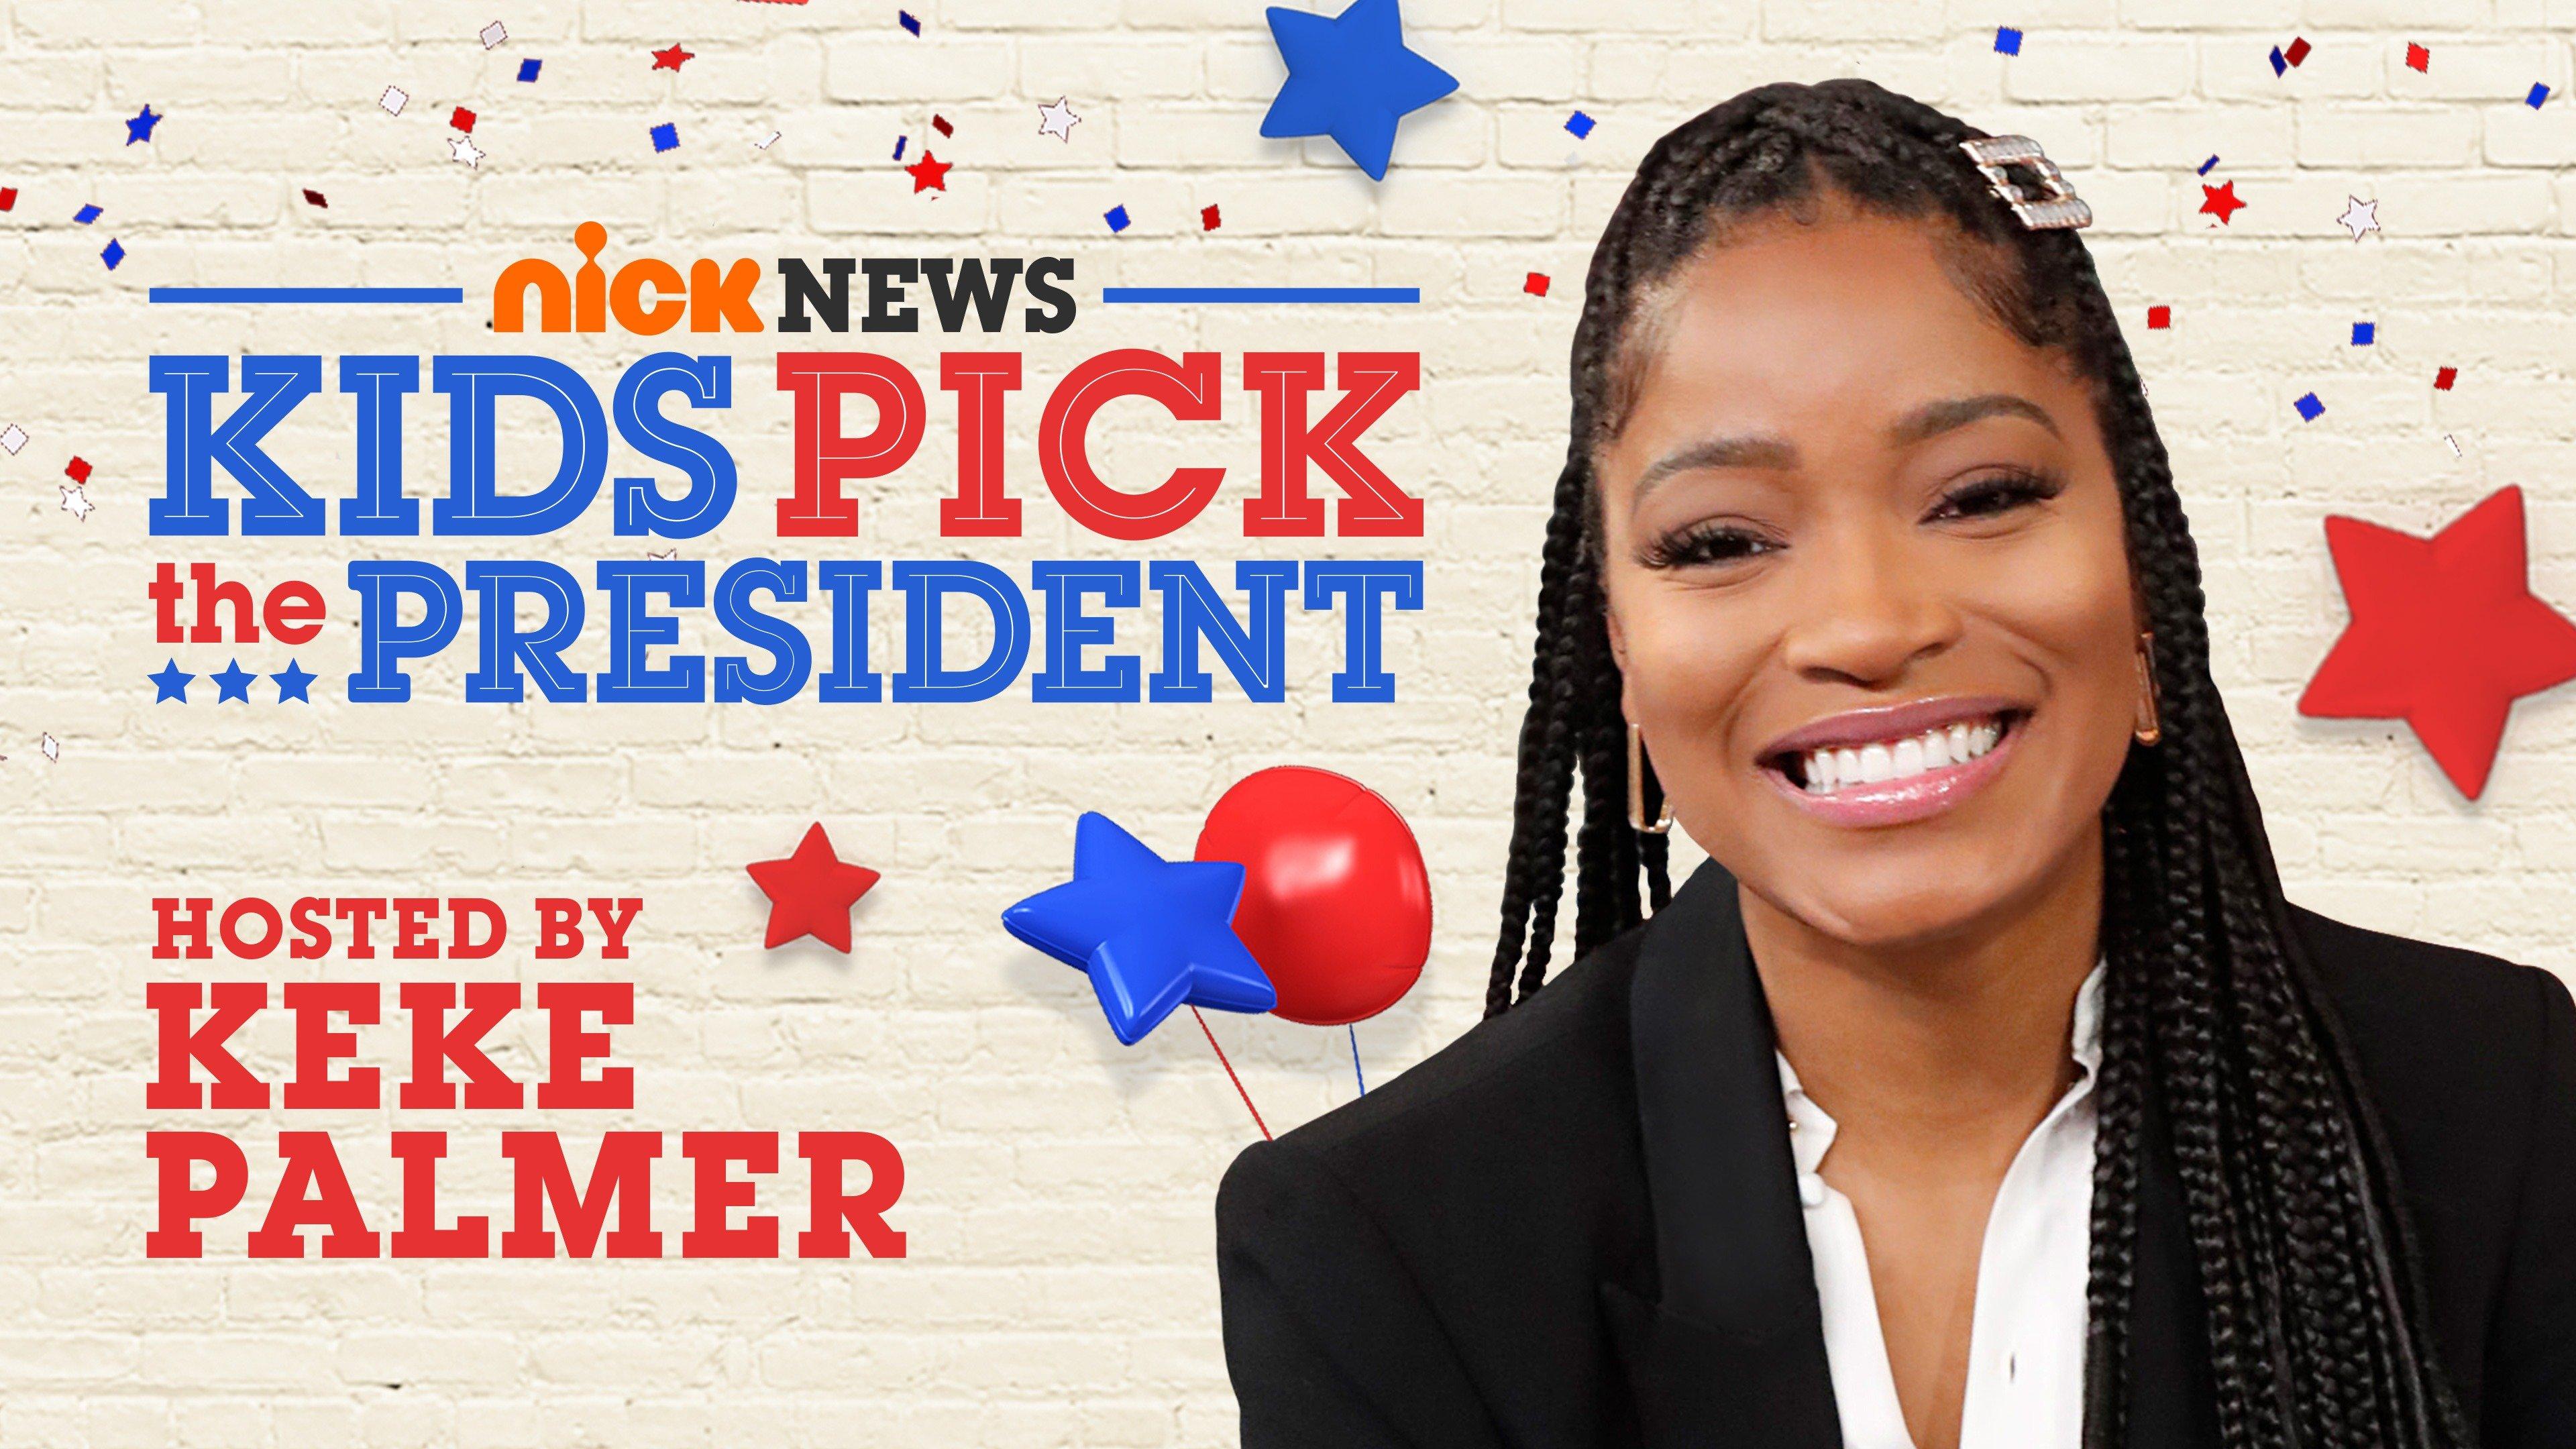 Nick News Kids Pick the President